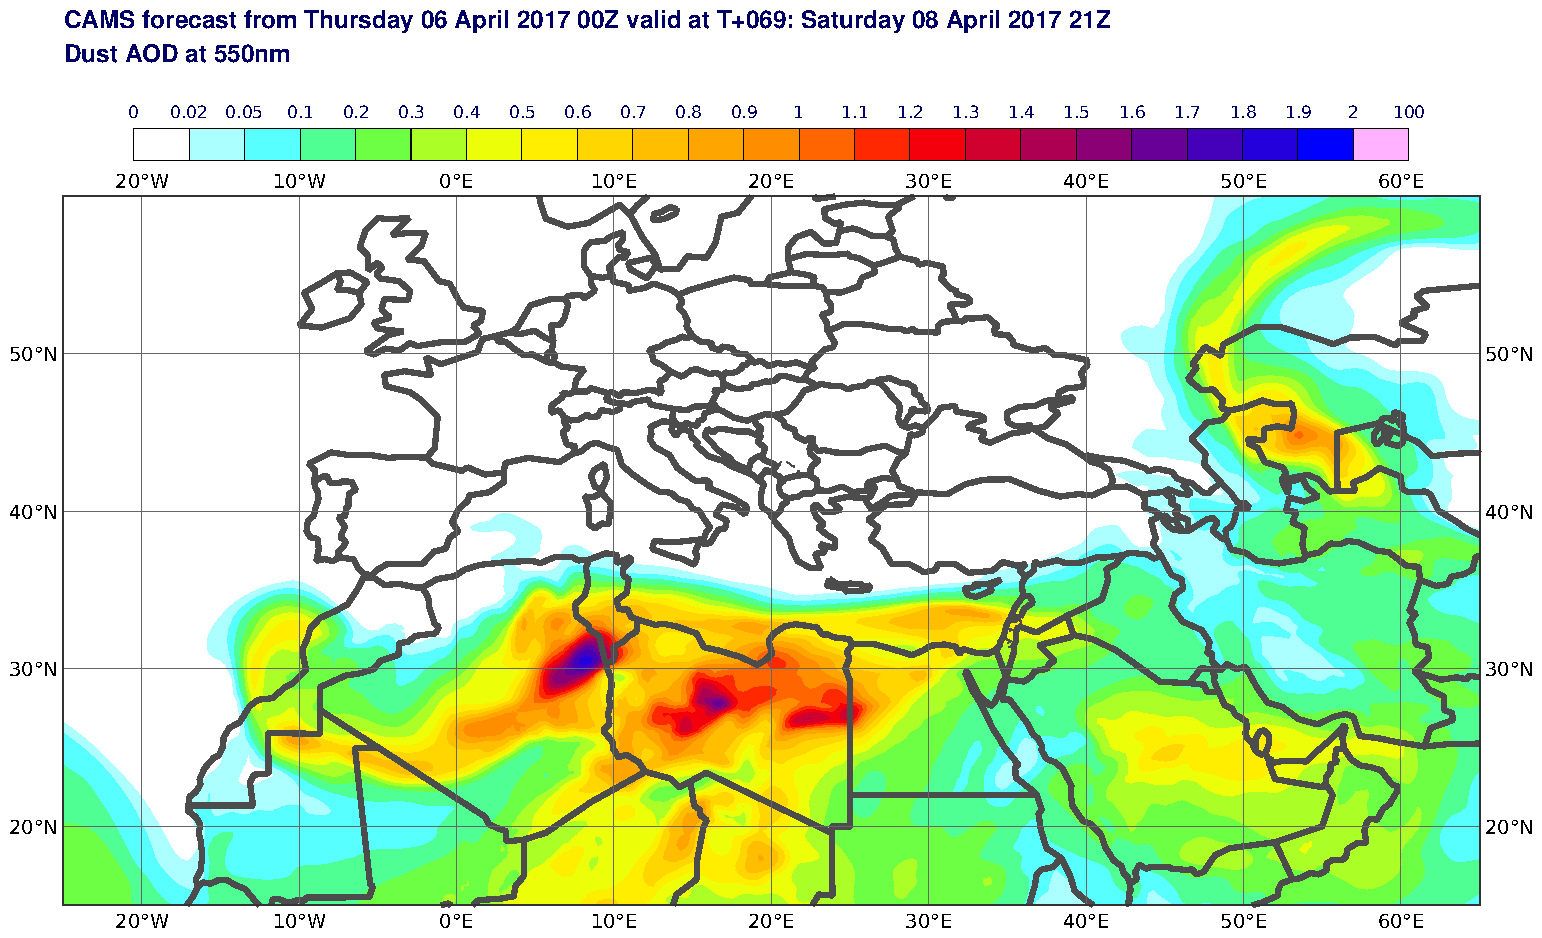 Dust AOD at 550nm valid at T69 - 2017-04-08 21:00